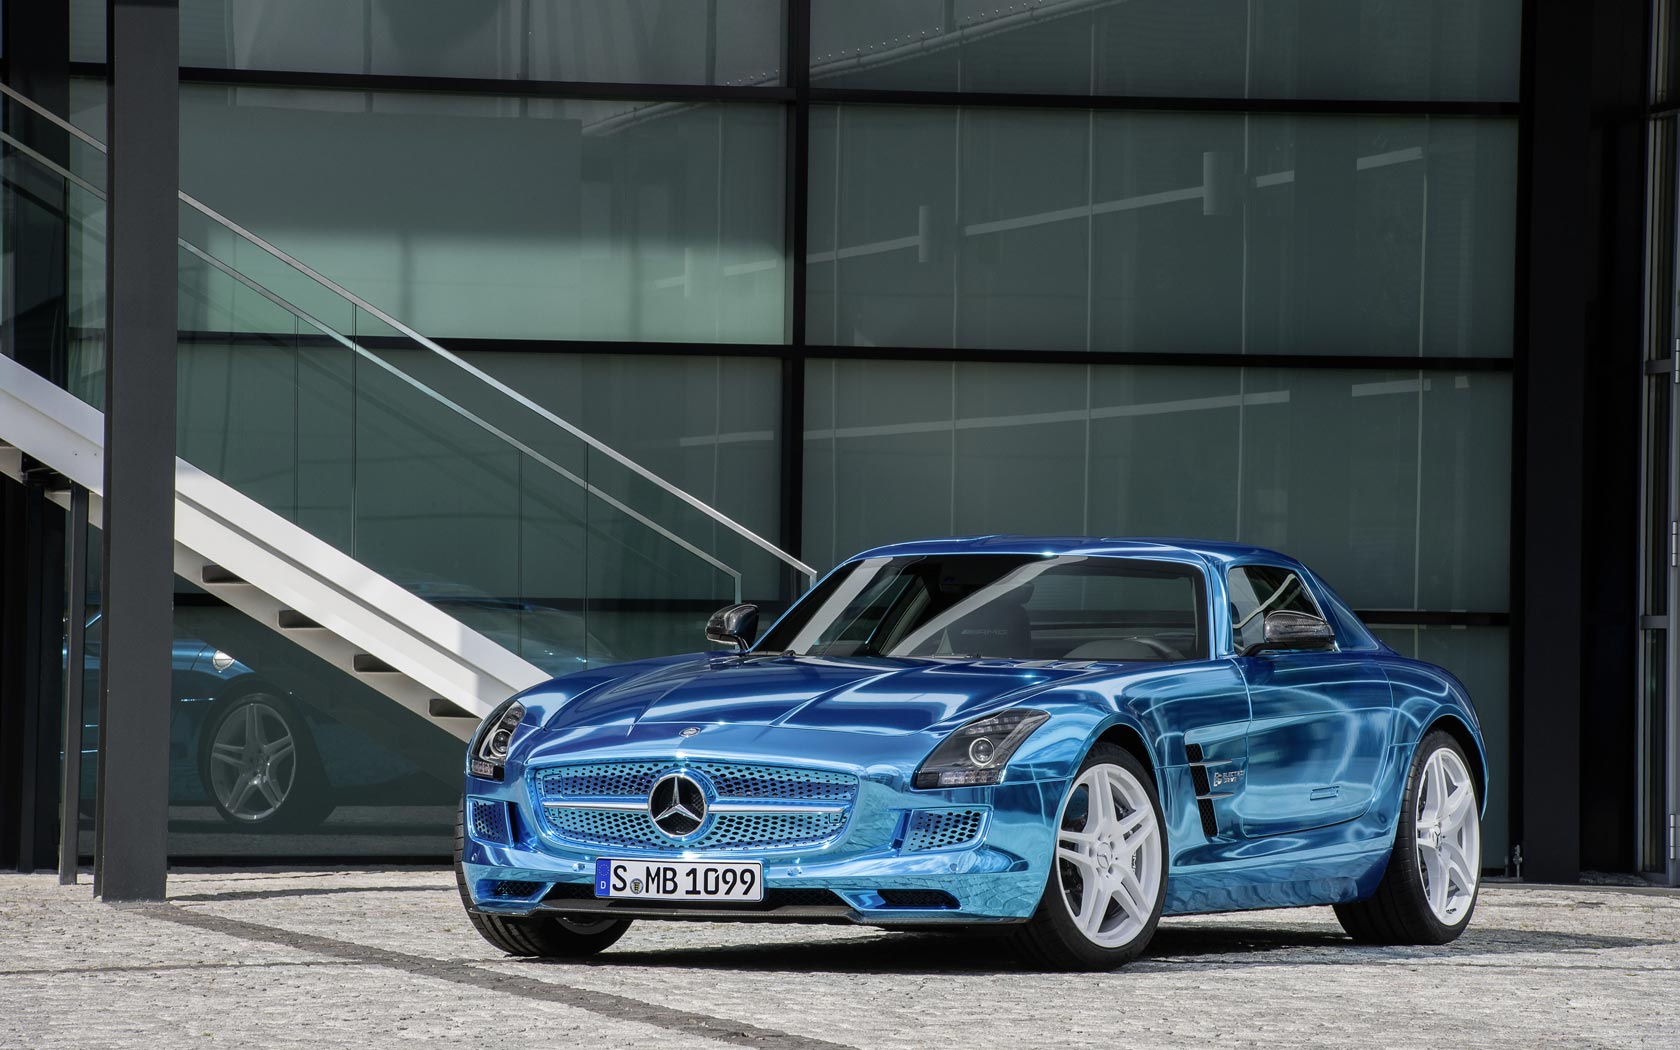  Mercedes SLS AMG Electric Drive 